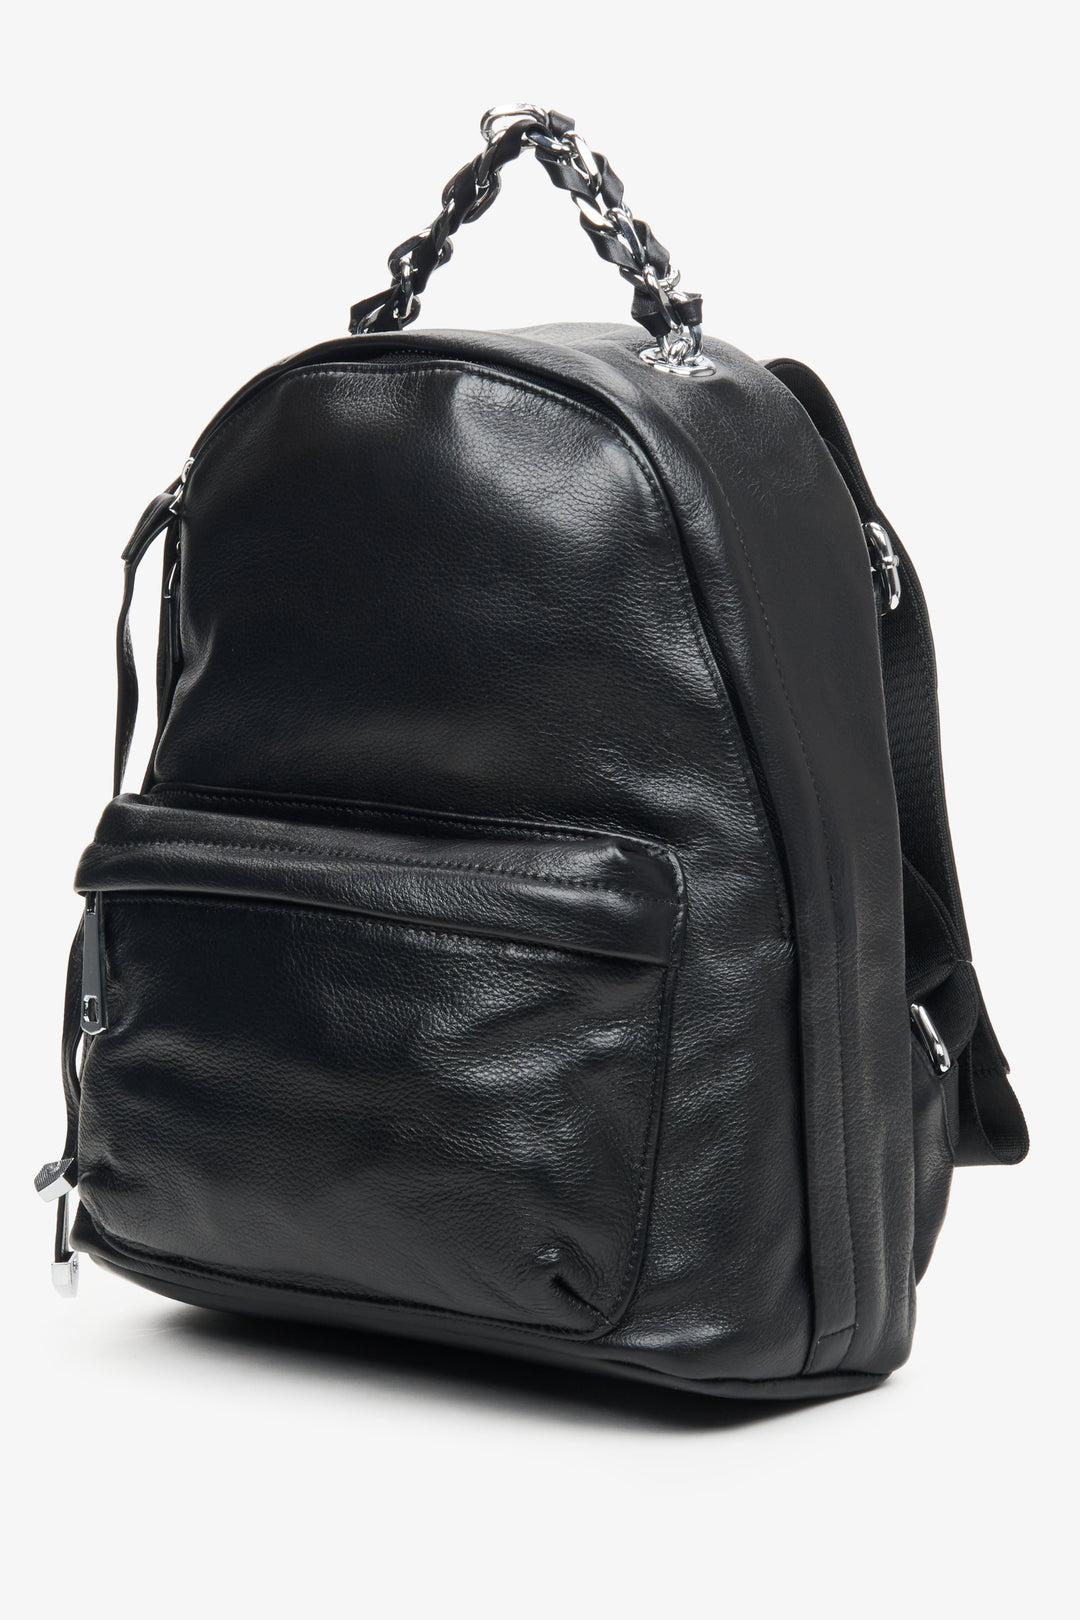 Estro's large, black women's leather backpack.